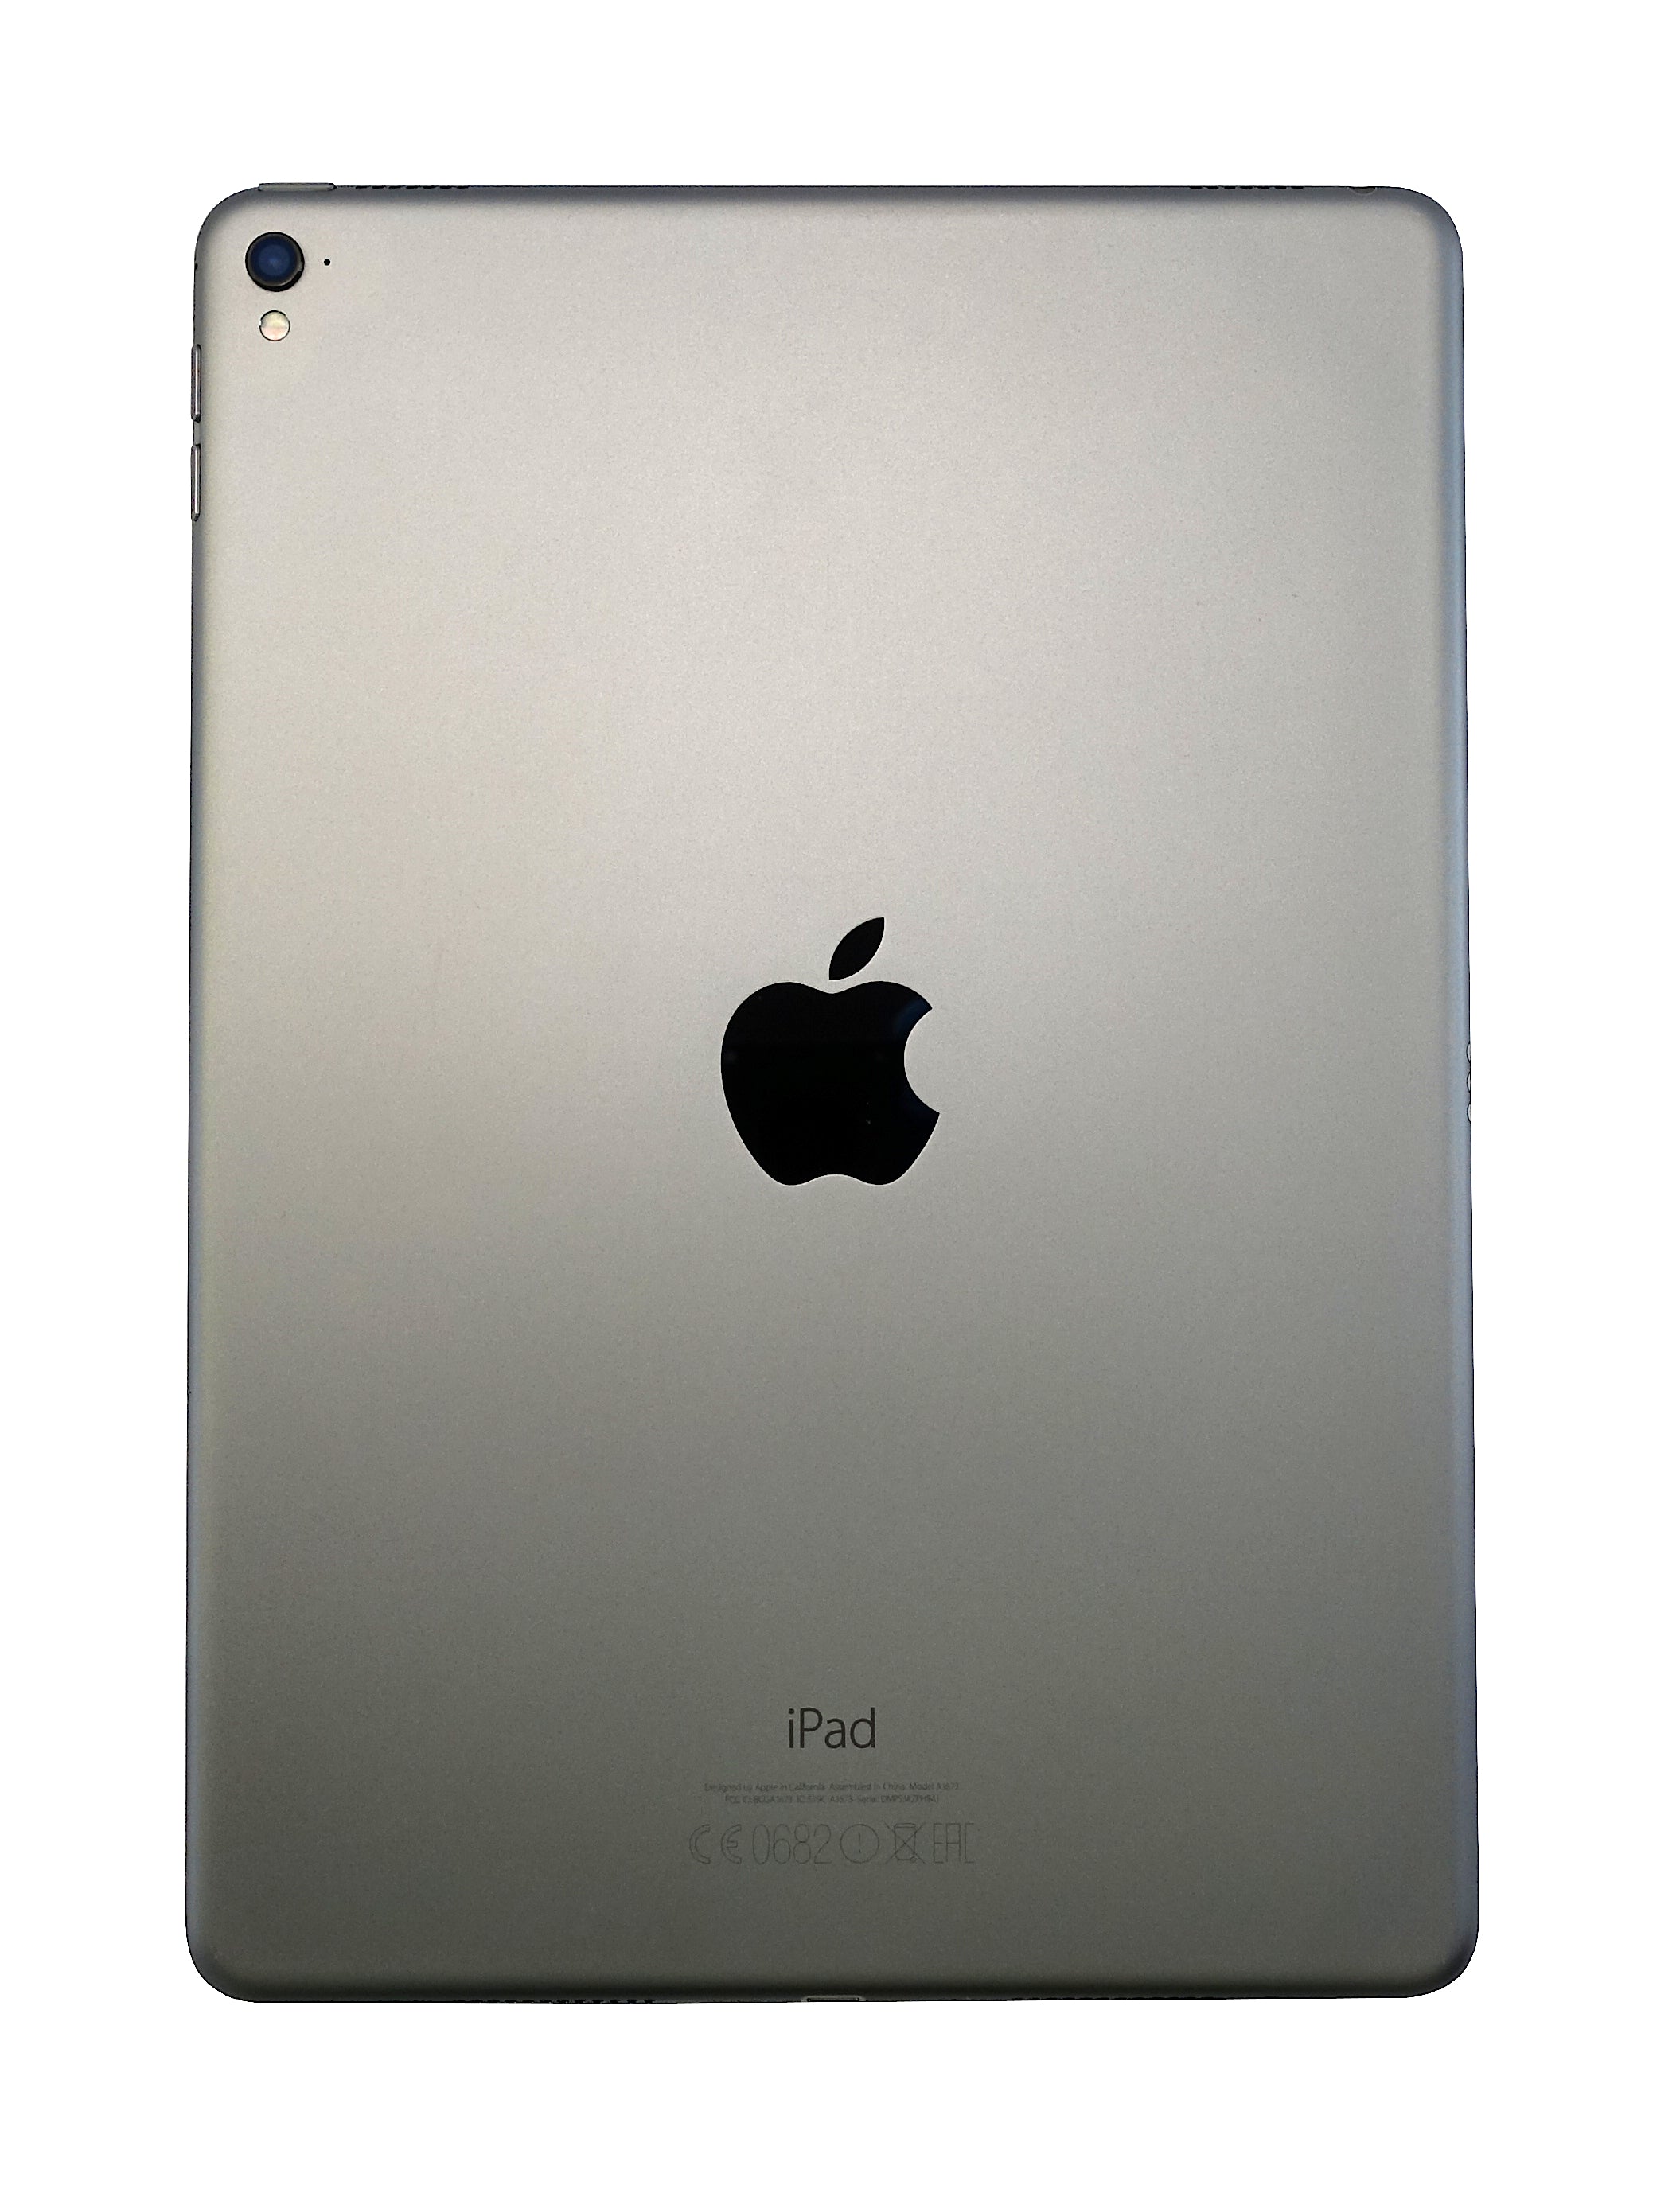 Apple iPad Pro Tablet, 9.7", 128GB, WiFi, Space Grey, A1673